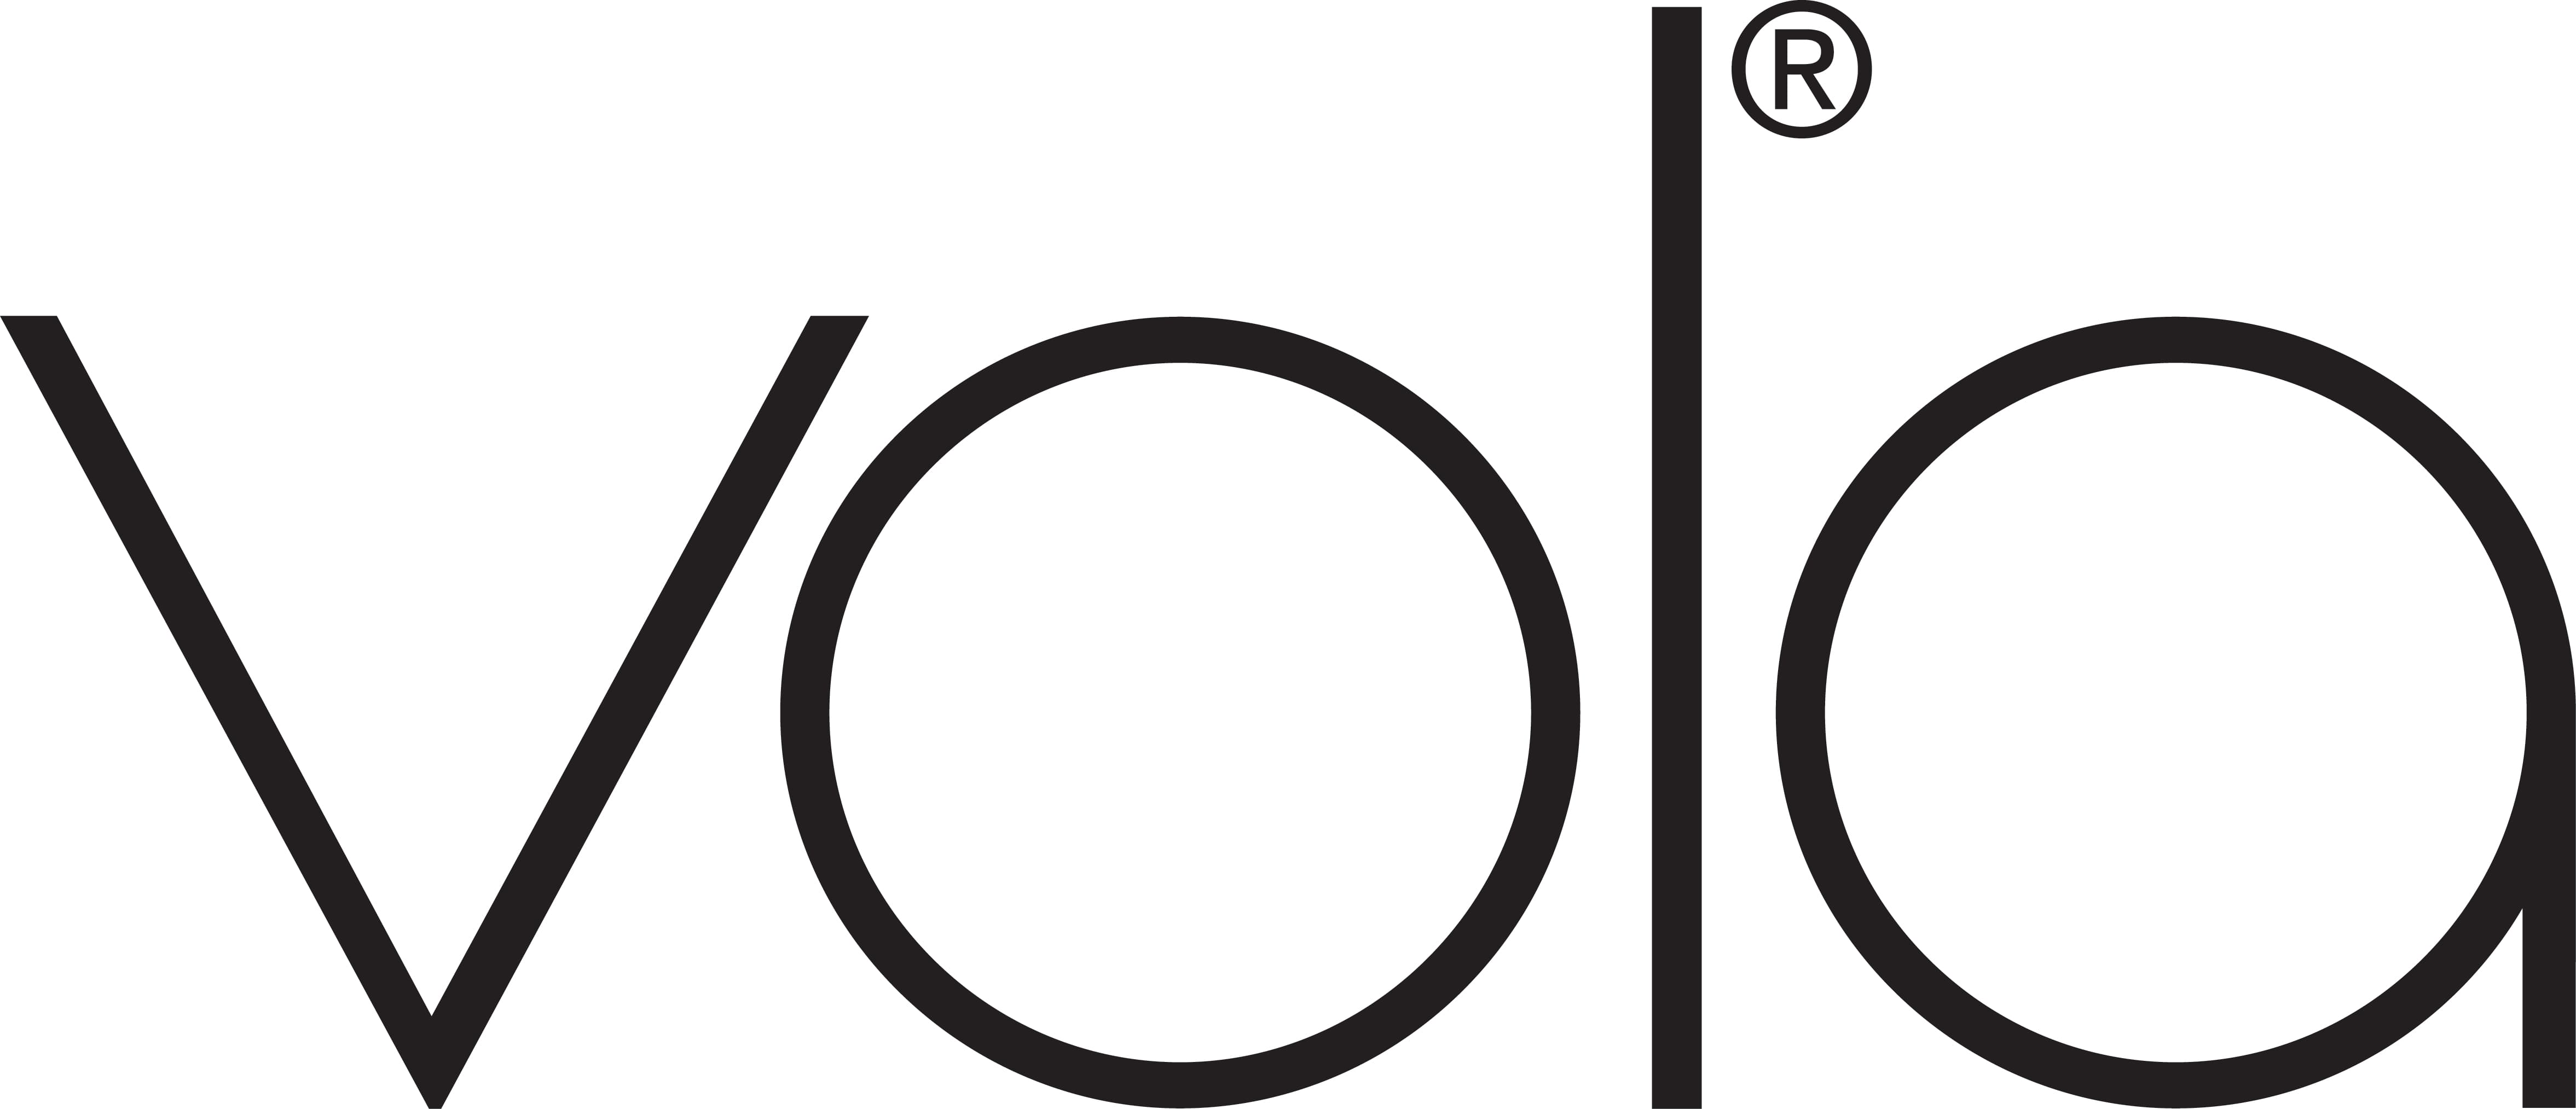 Логотип бренда Vola